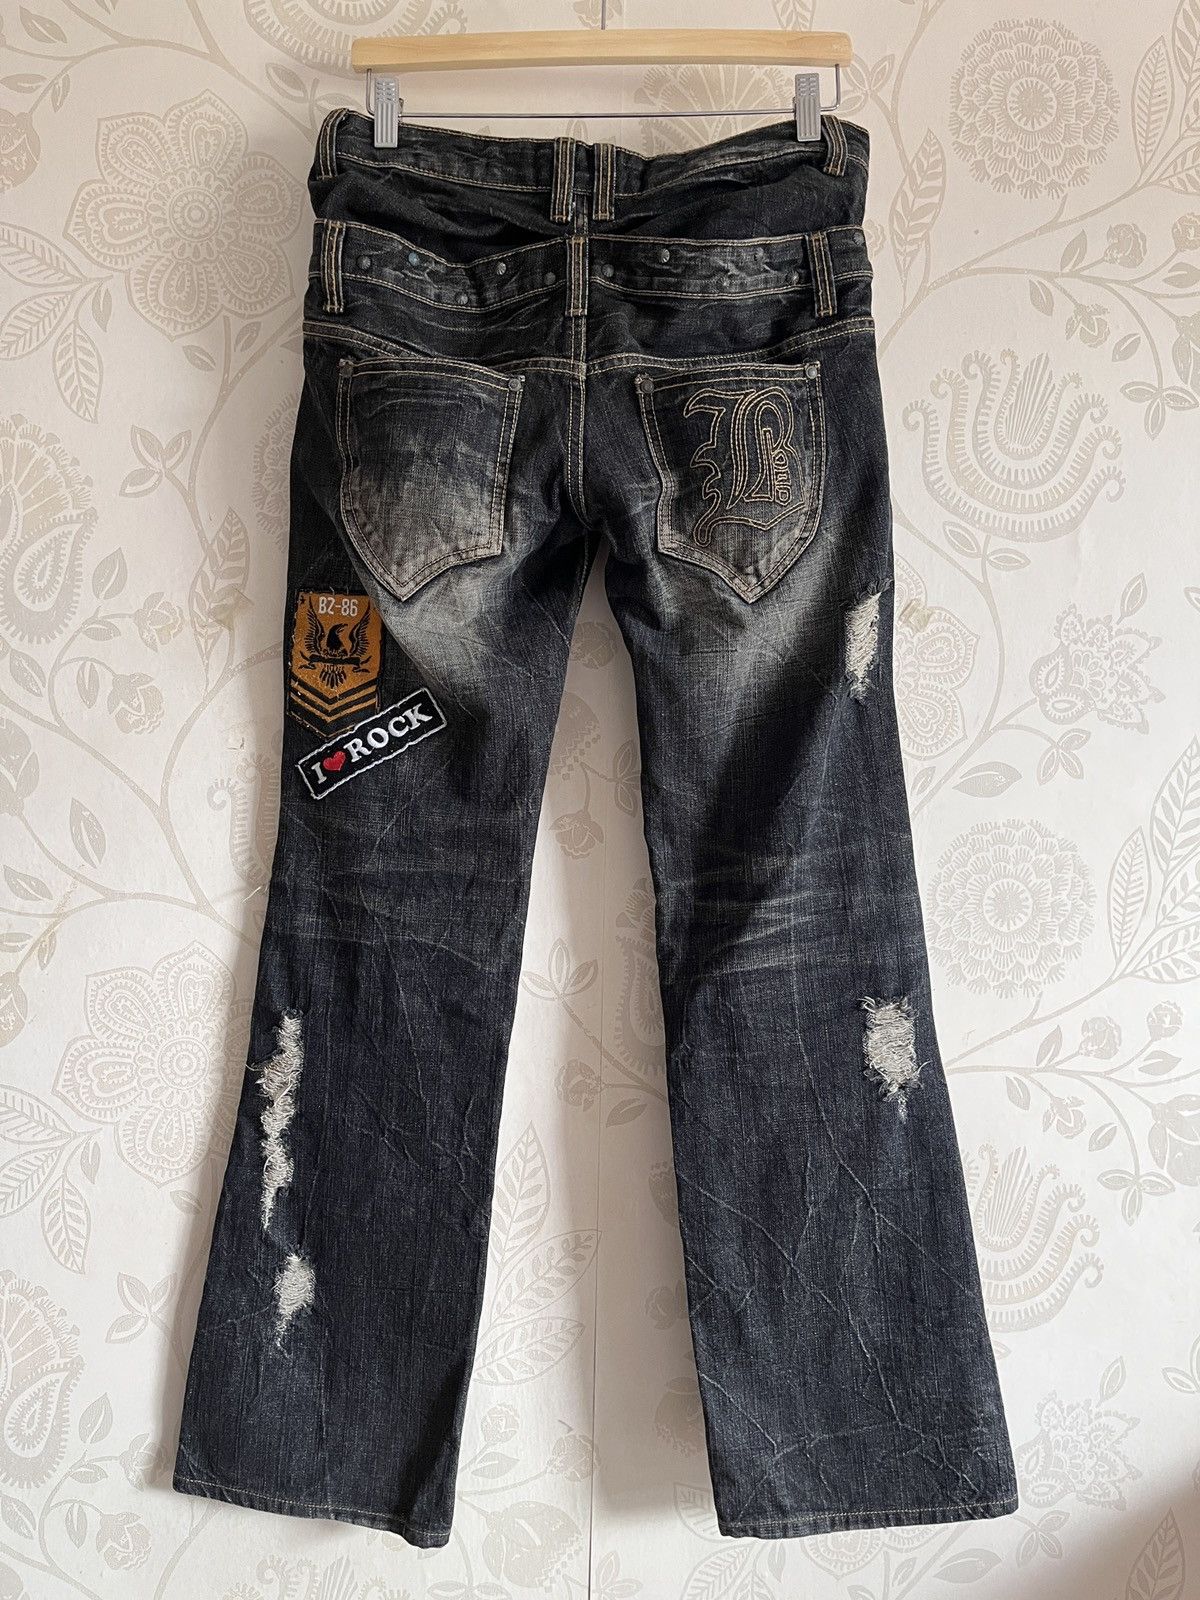 Buzz Rickson's - Rare Distressed Undercover Double Waist Buzz Spunky Jeans - 25